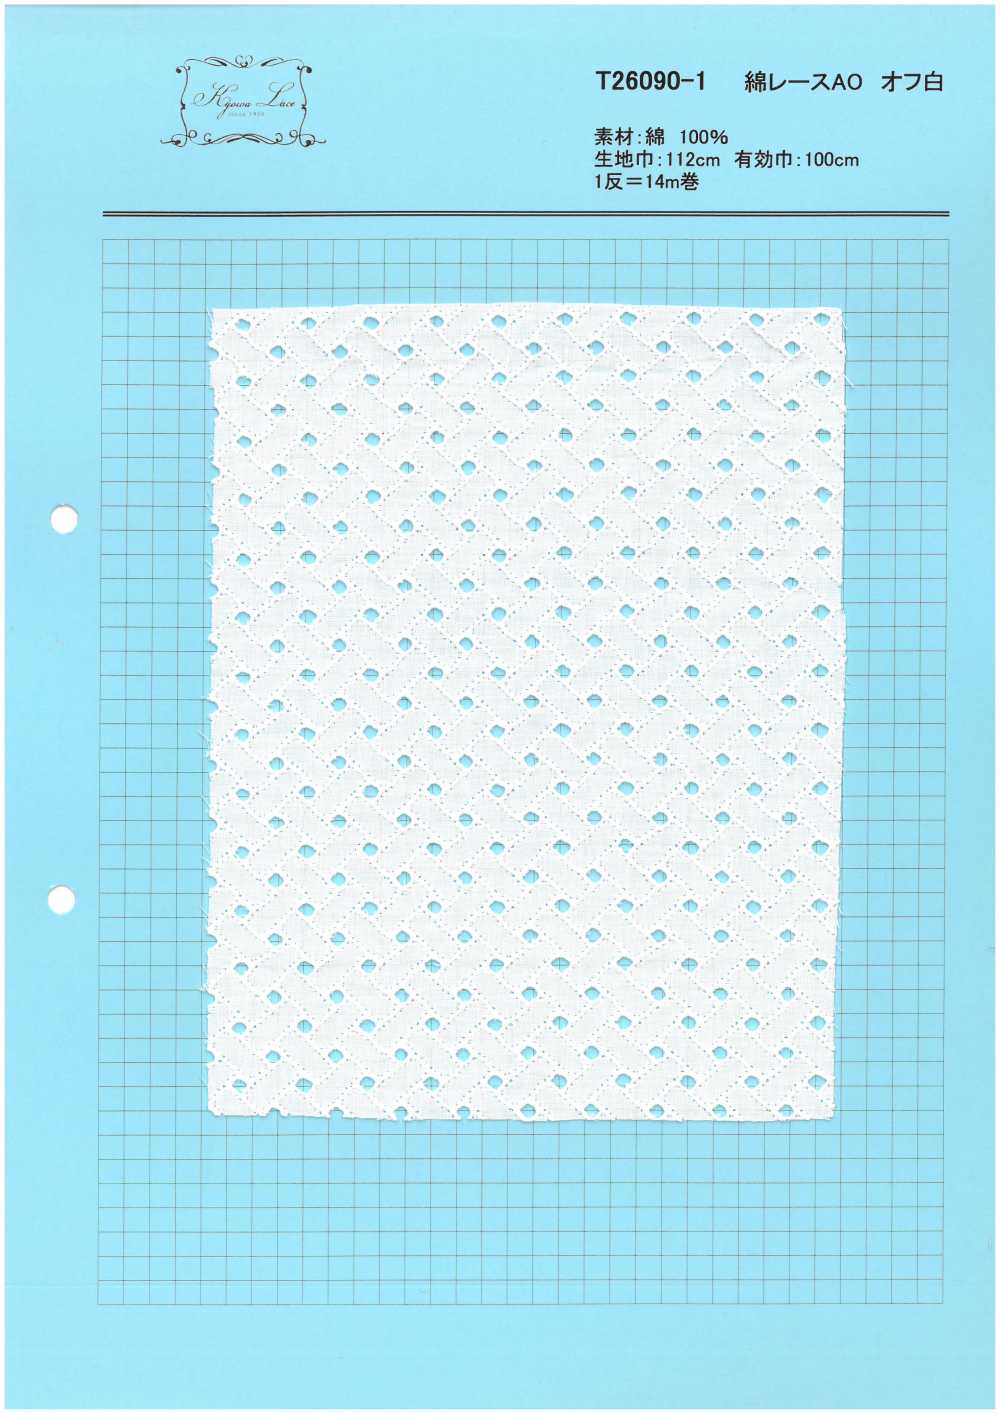 T26090-1 Baumwollspitze AO Off White[Textilgewebe] Kyowa Lace